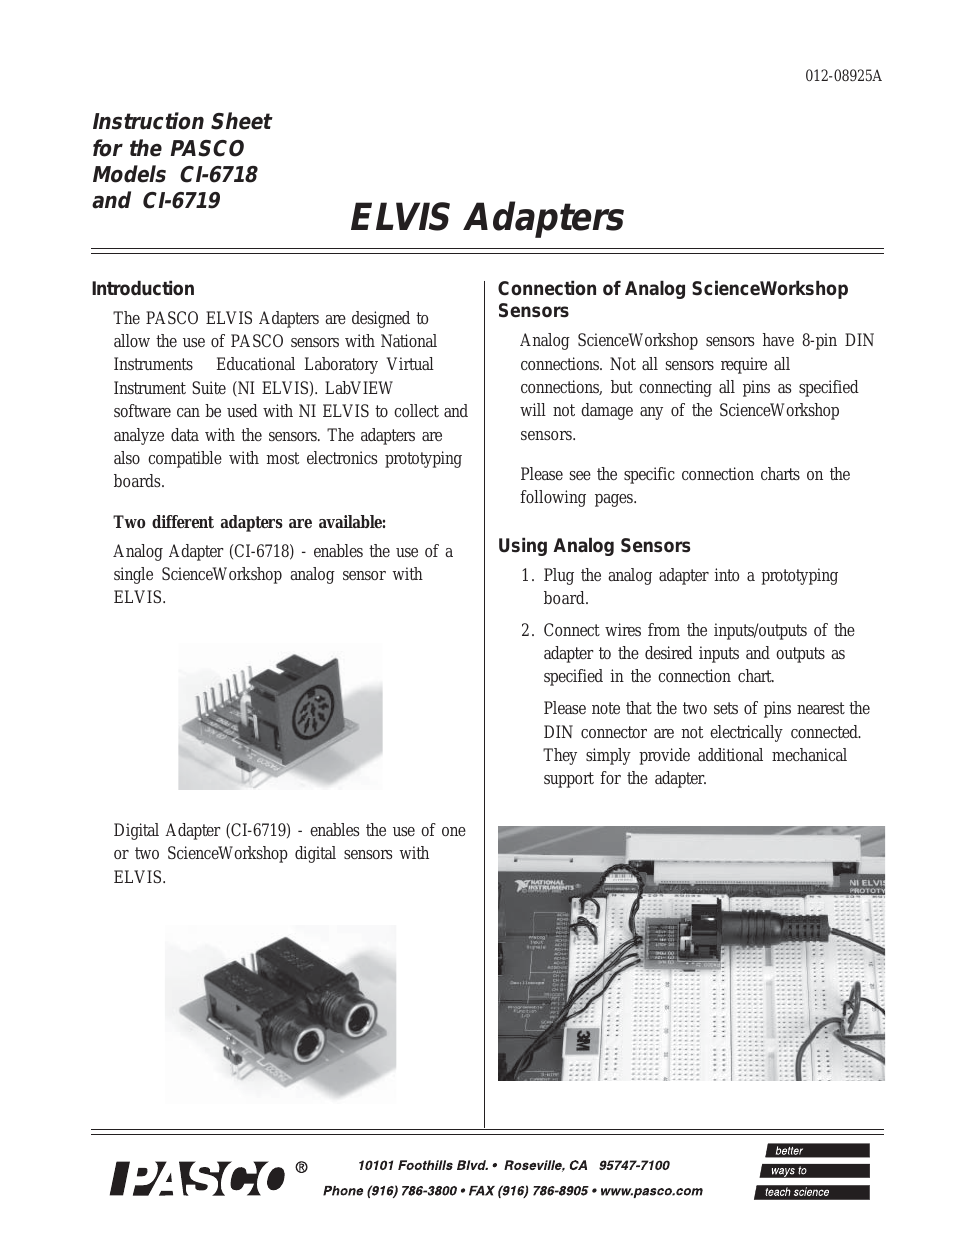 CI-6718 ELVIS Adapters